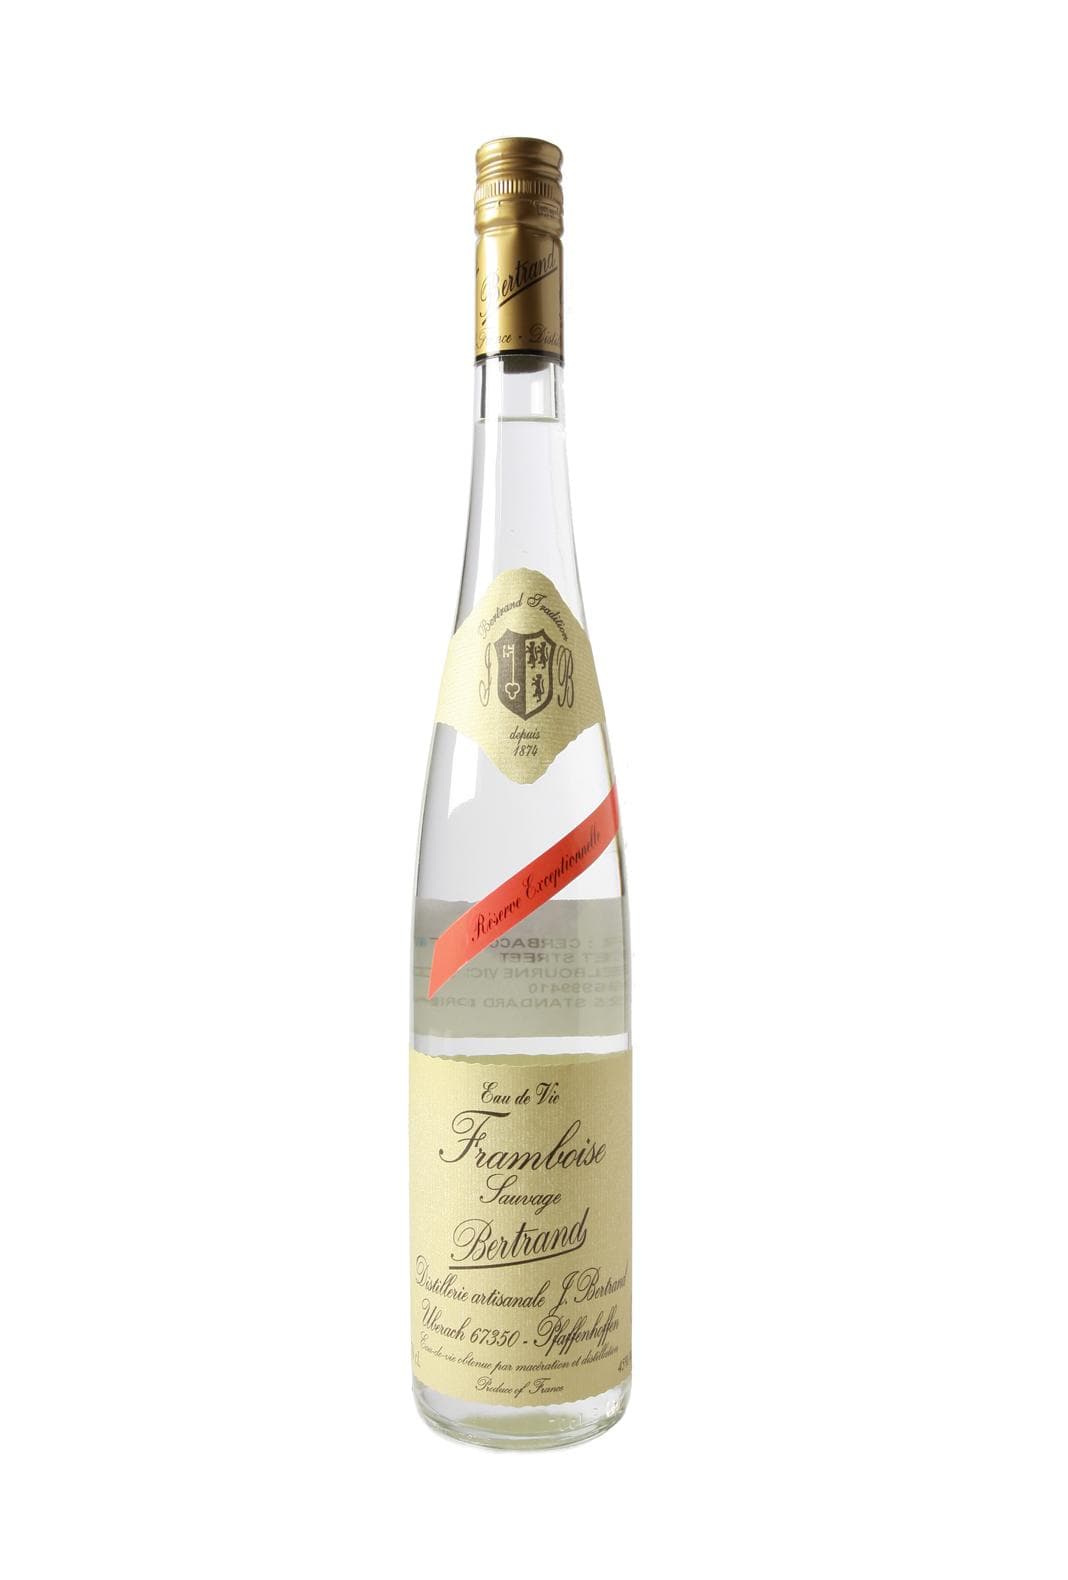 Bertrand Eau de Vie Framboise Sauvage (Raspberry) 45% 700ml | Liqueurs | Shop online at Spirits of France